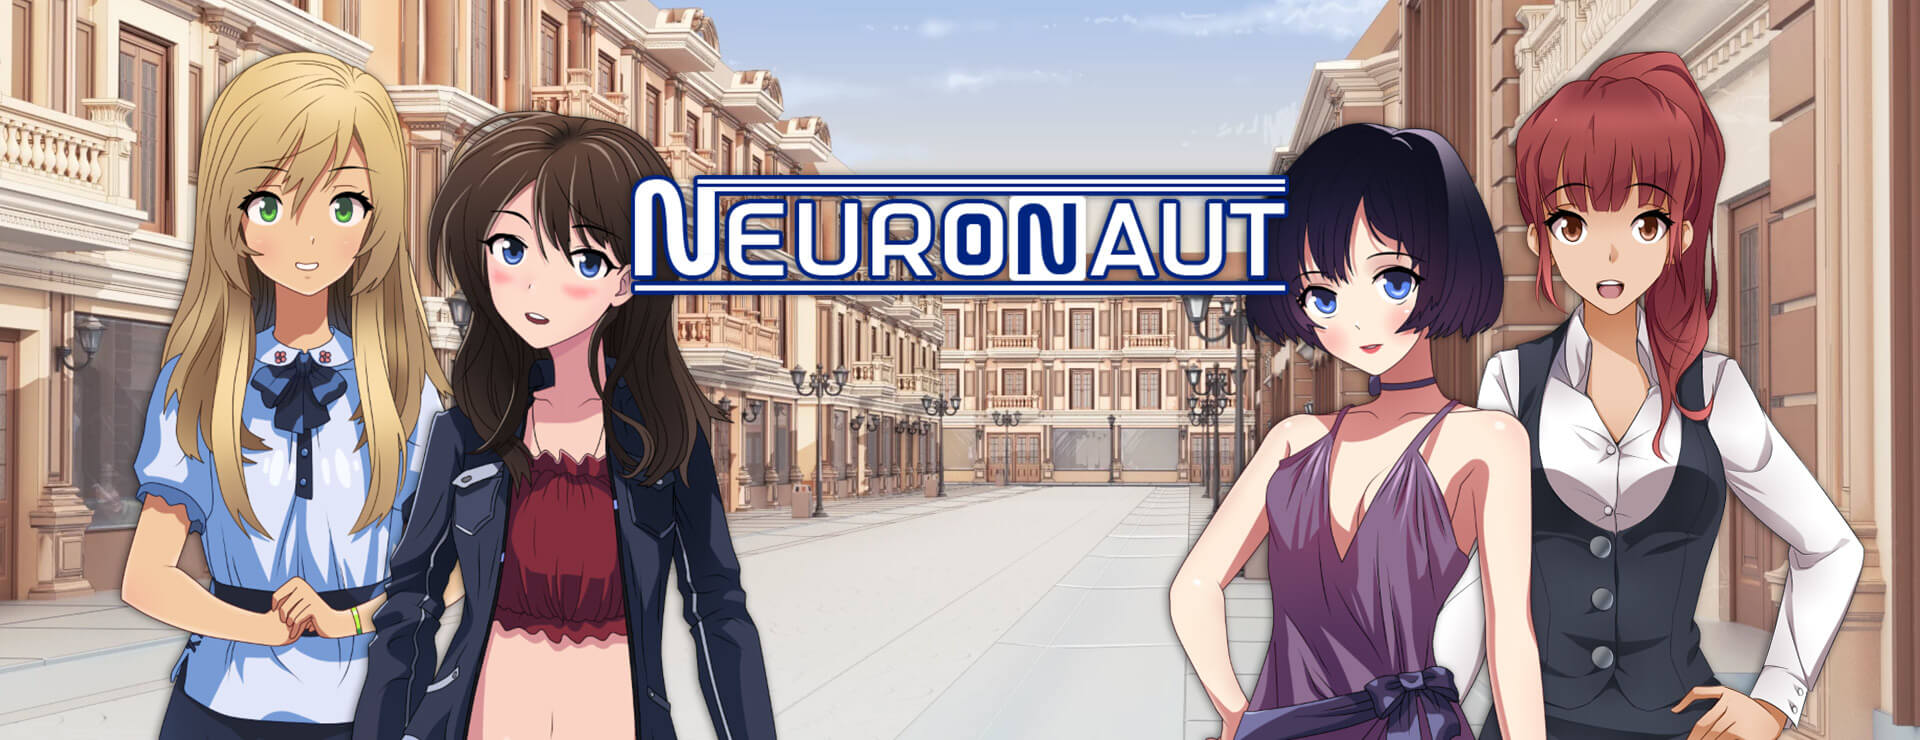 Neuronaut - Action Adventure Spiel